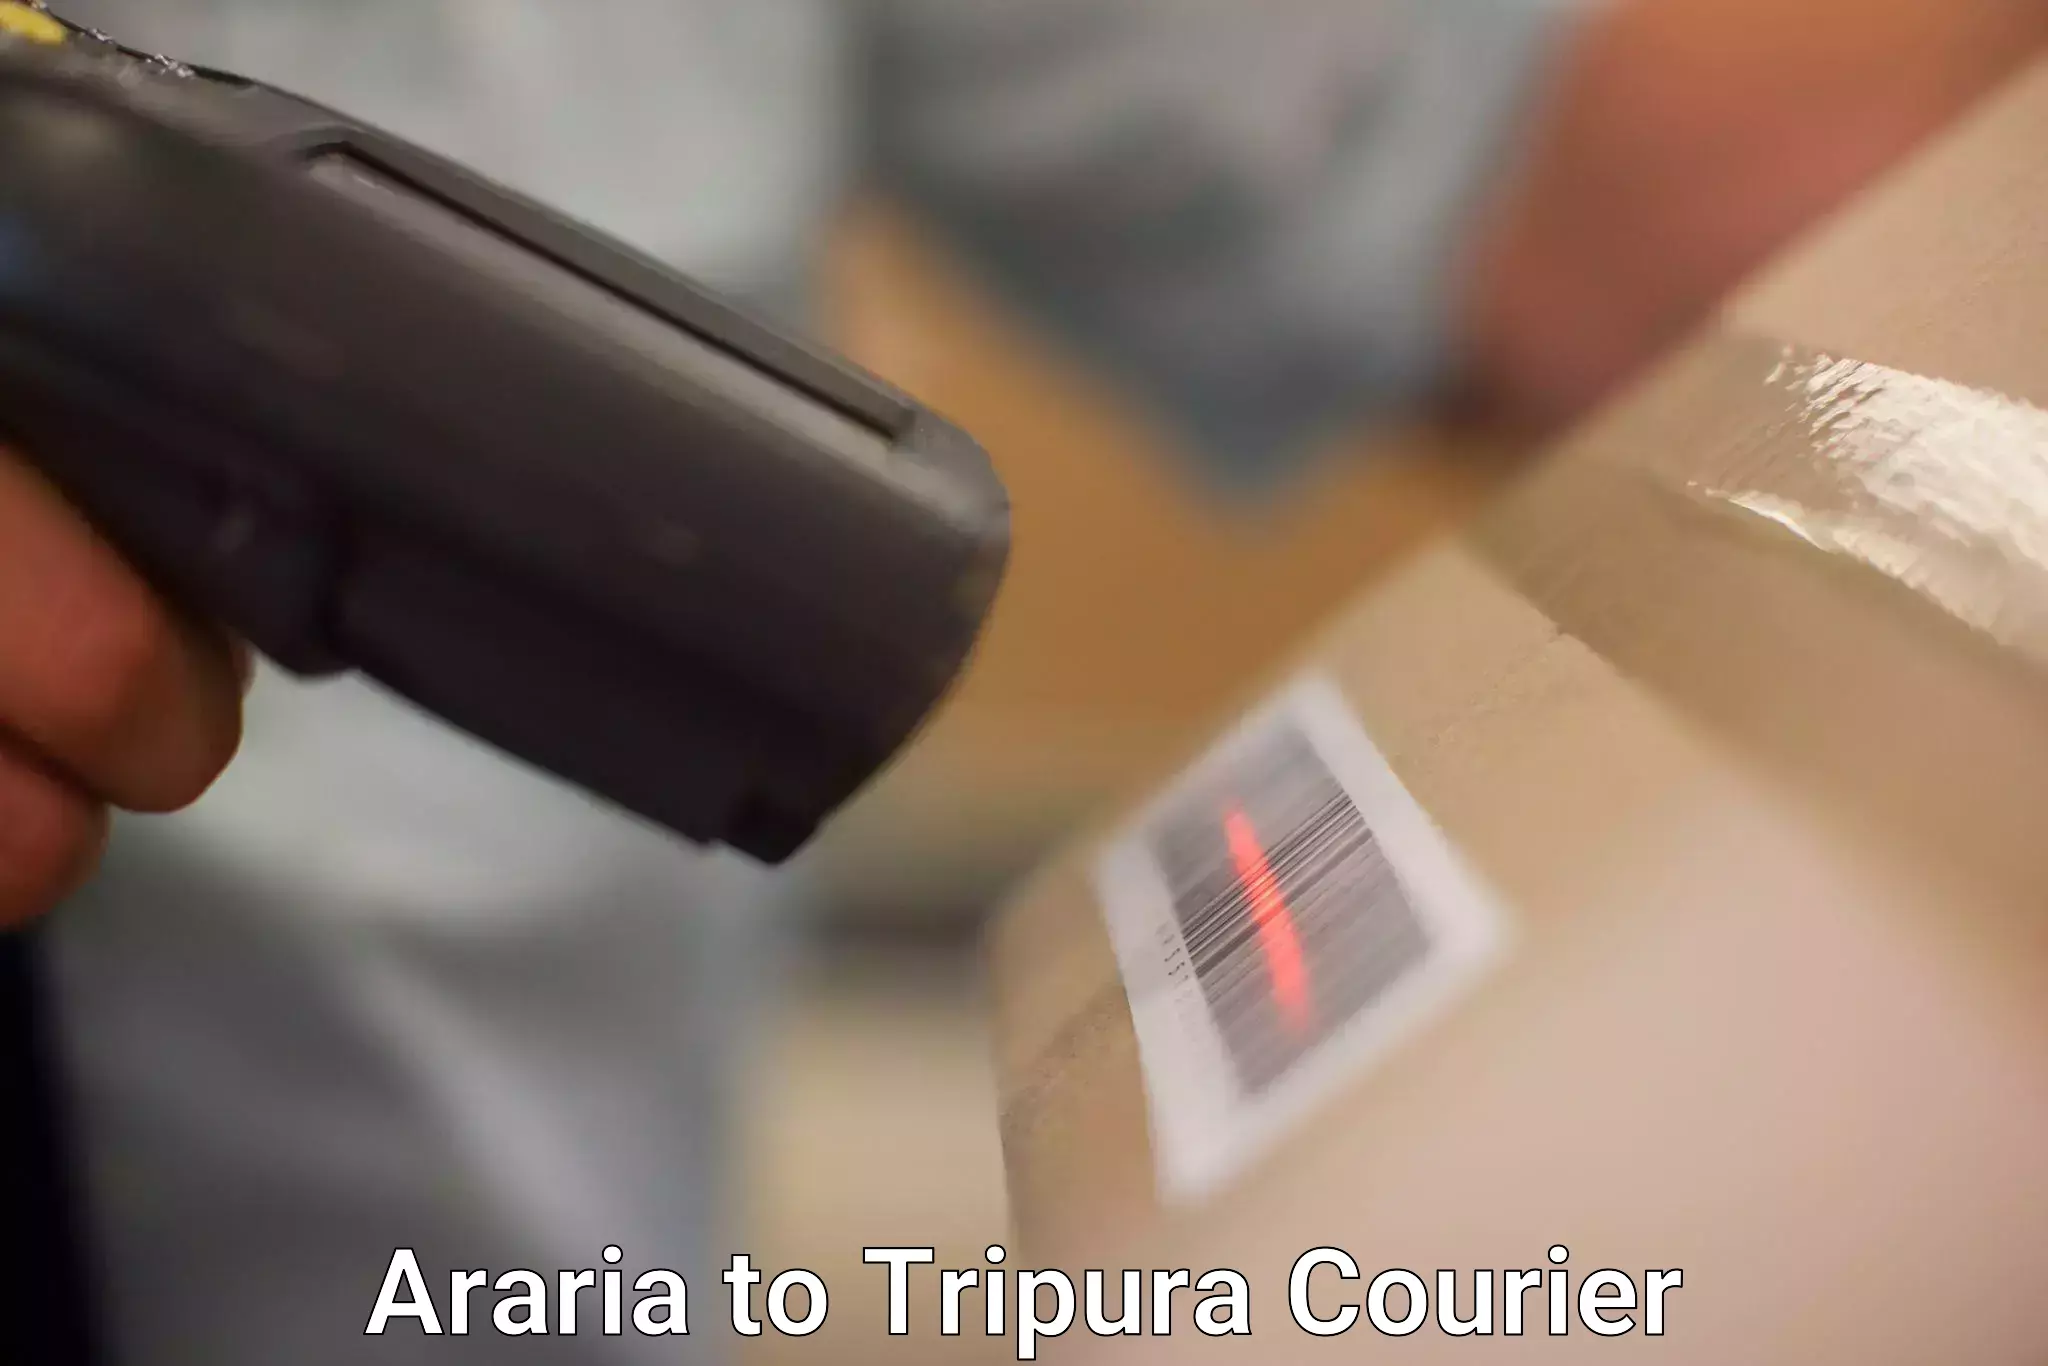 Doorstep delivery service Araria to Tripura